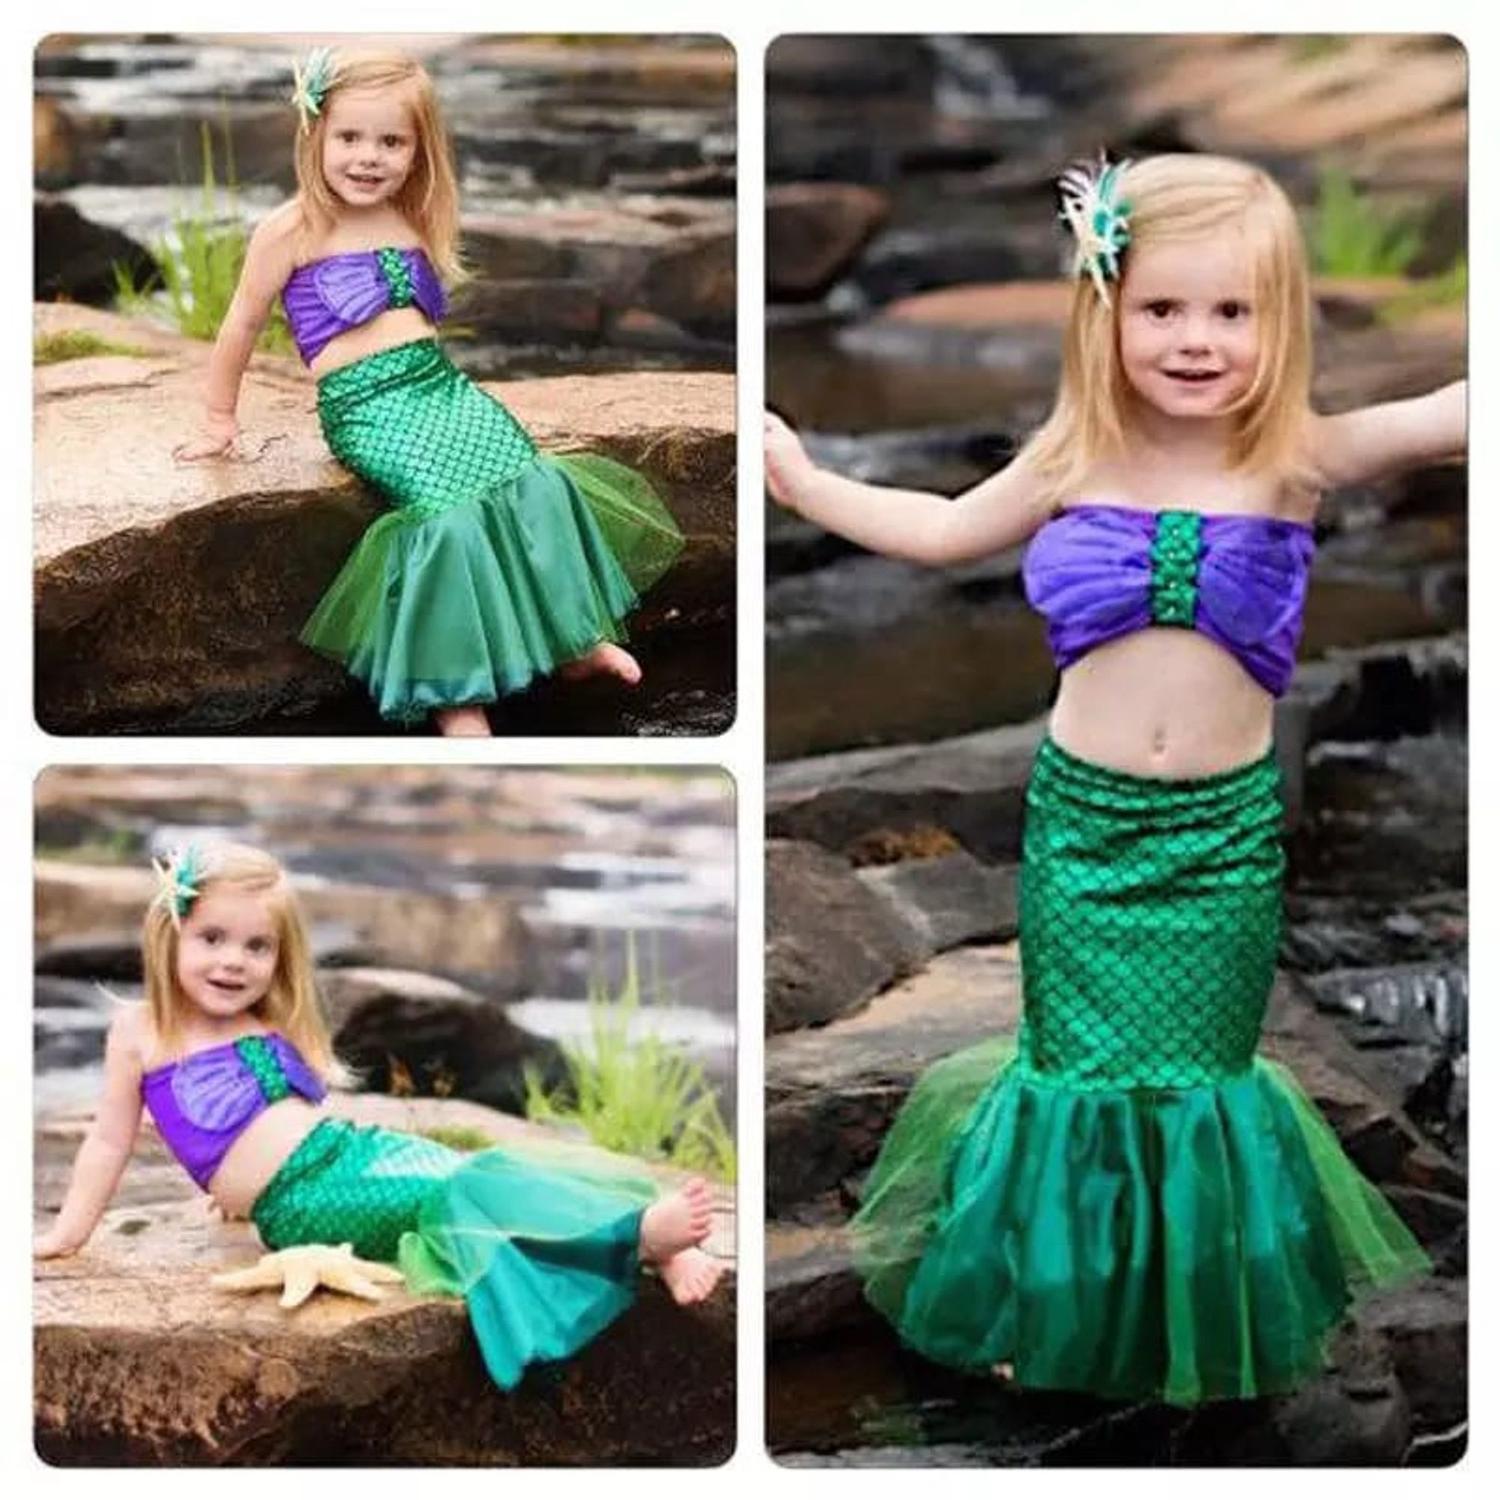 Fantasia Vestido de Sereia Ariel Infantil de Luxo